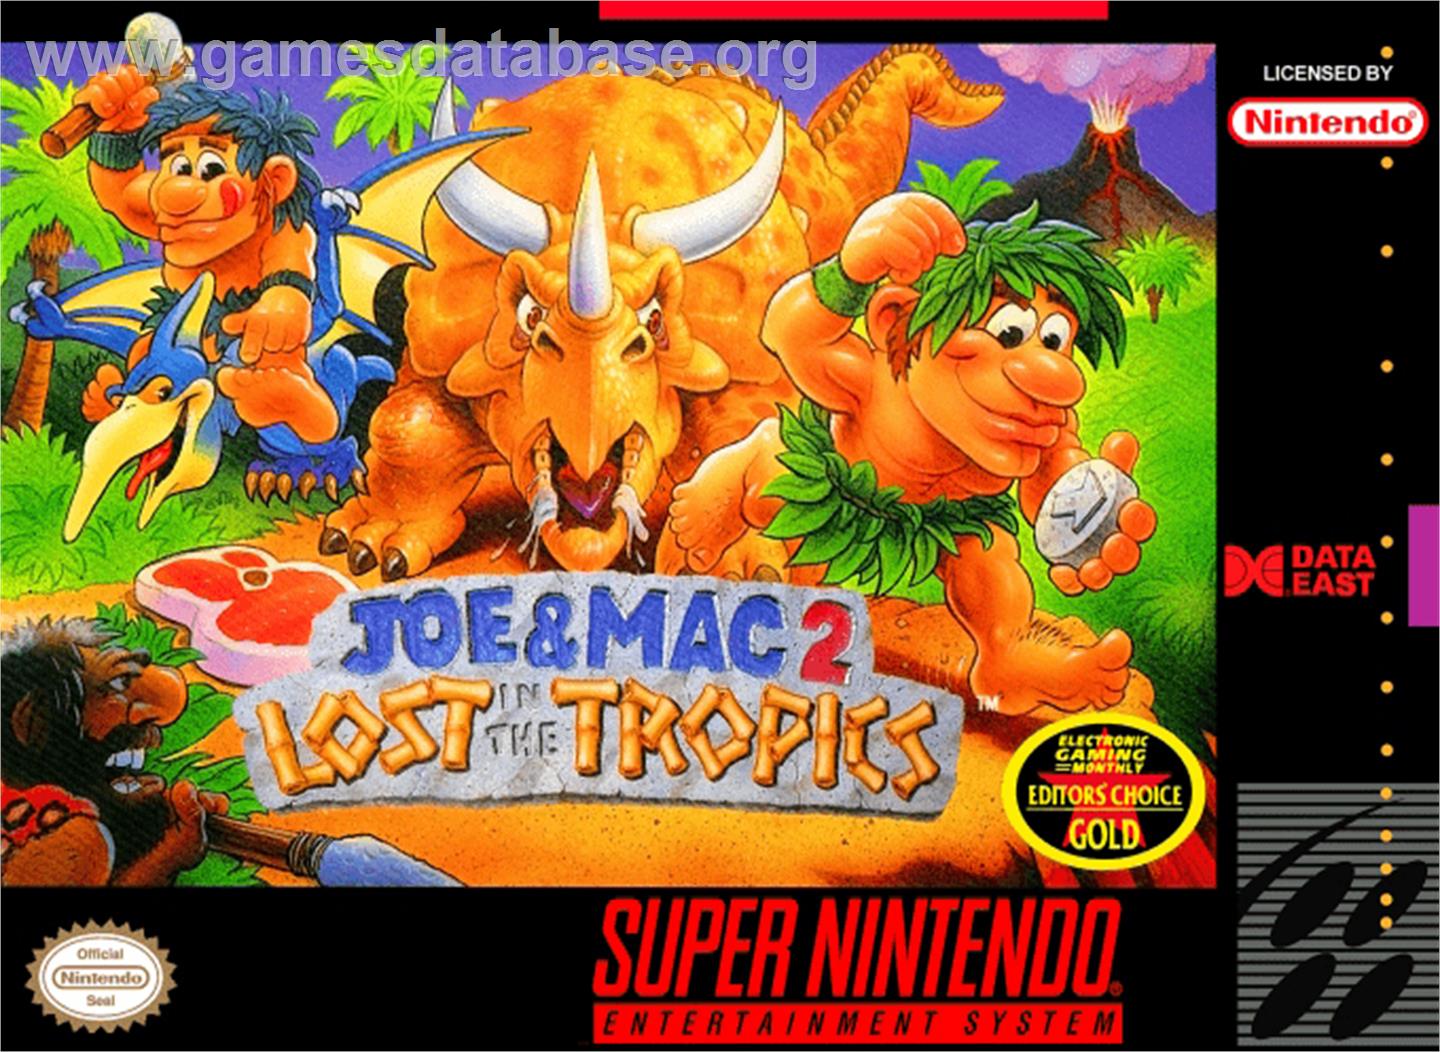 Joe & Mac 2: Lost in the Tropics - Nintendo SNES - Artwork - Box